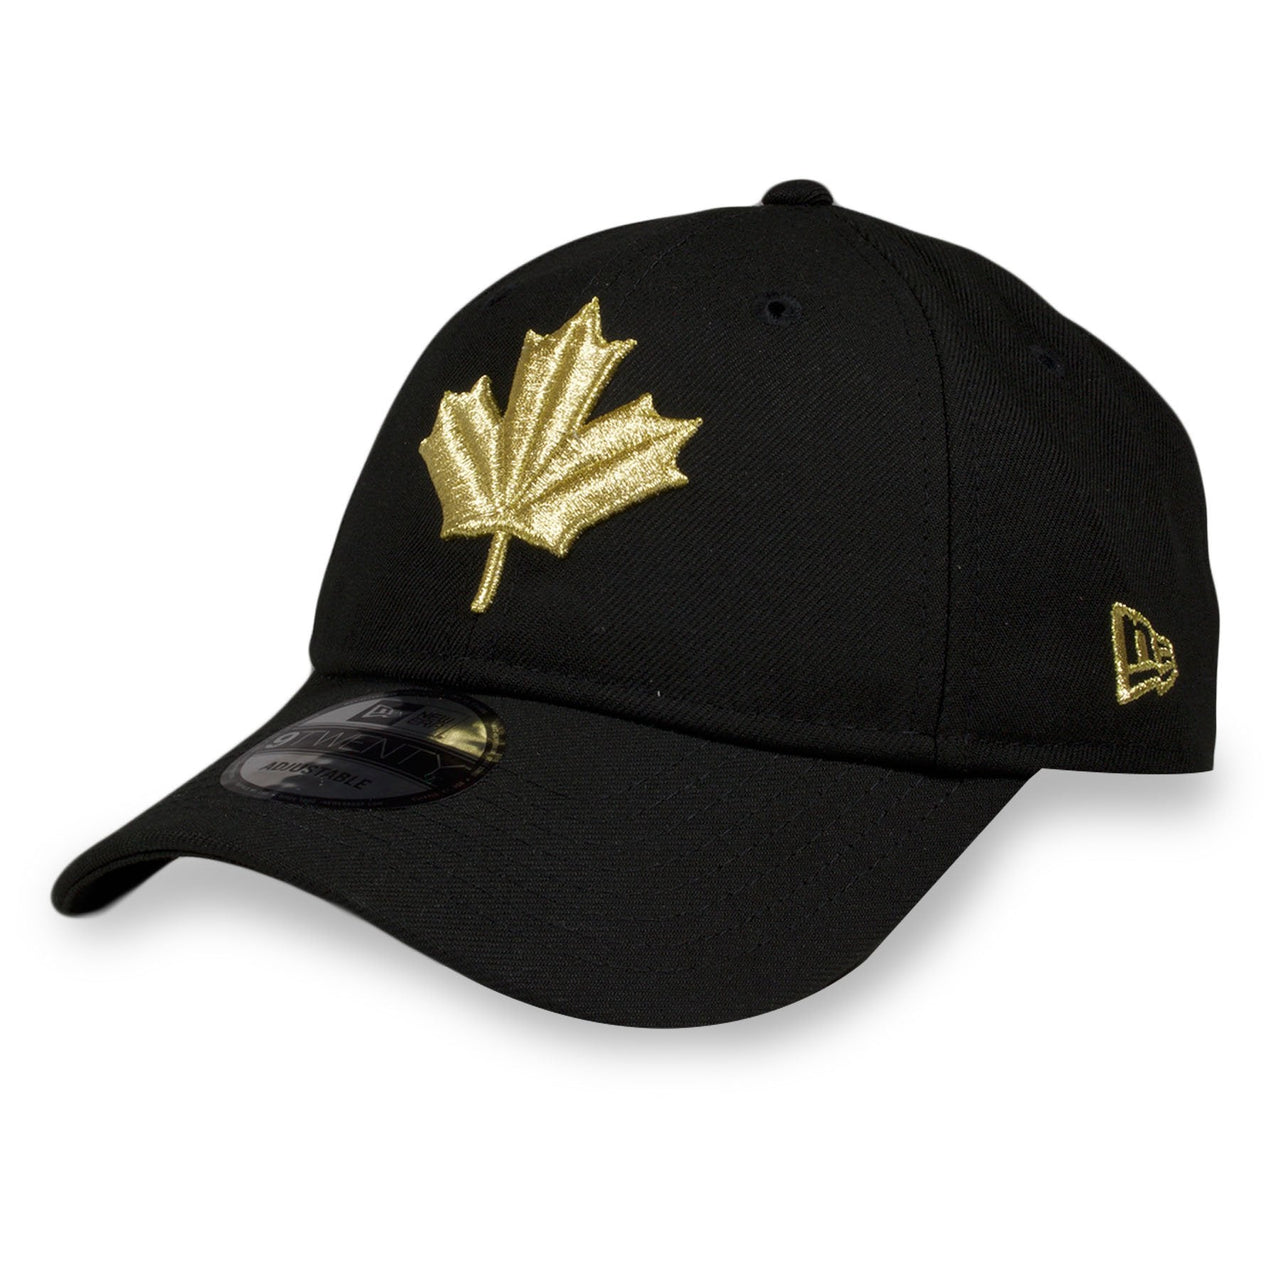 the Toronto Raptors 2019 NBA City Series Black Dad Hat | Metallic Gold Leaf Logo Raptors Baseball Cap has an XL Raptors logo on the front and a gold New Era logo on the side